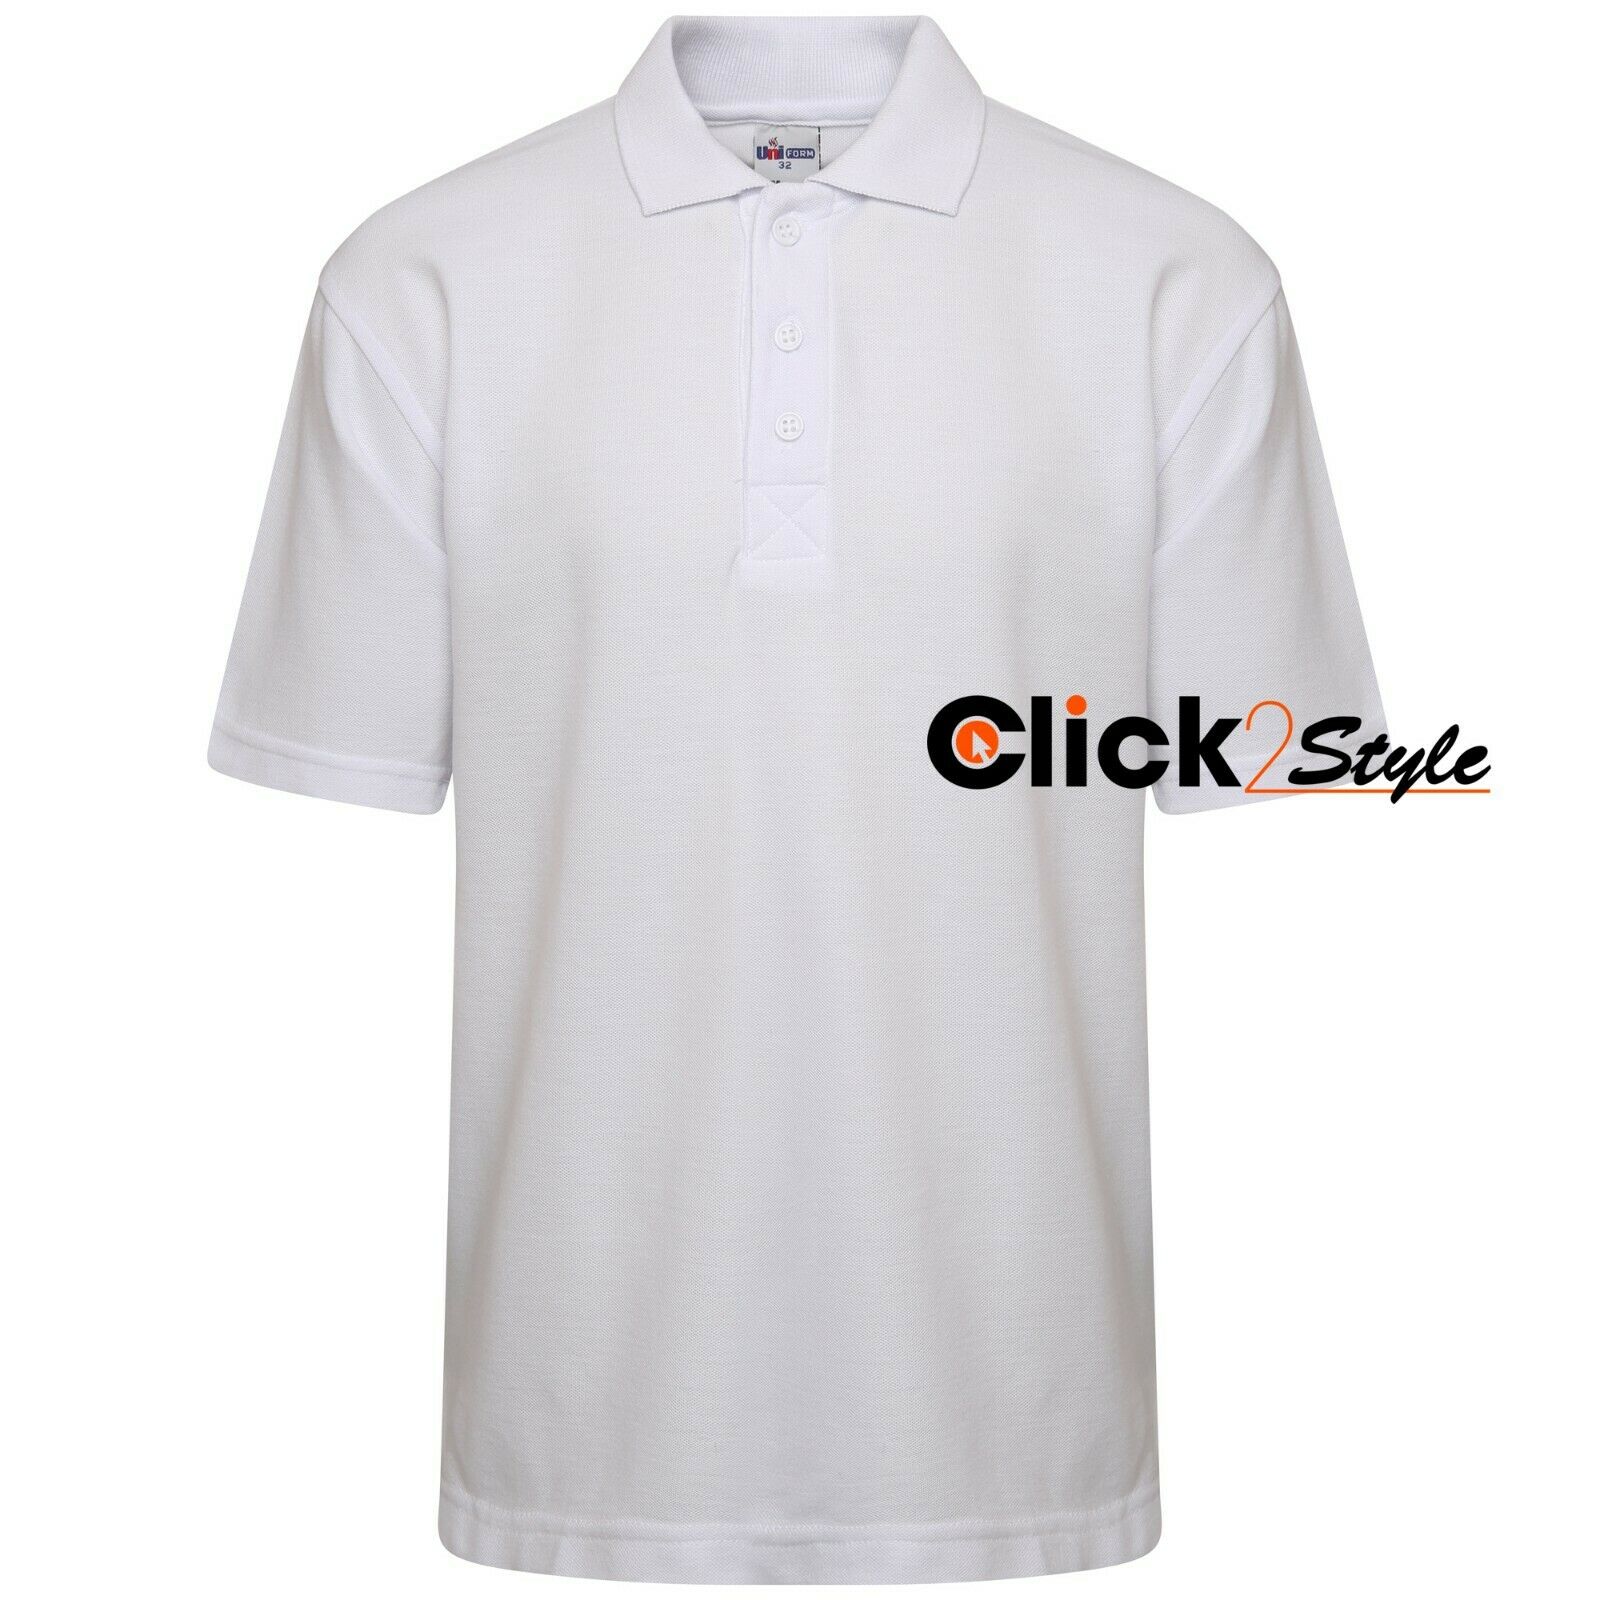 School Uniform White Polo T Shirts Plain Kids T Shirt Boys Girls Tee Top Sports